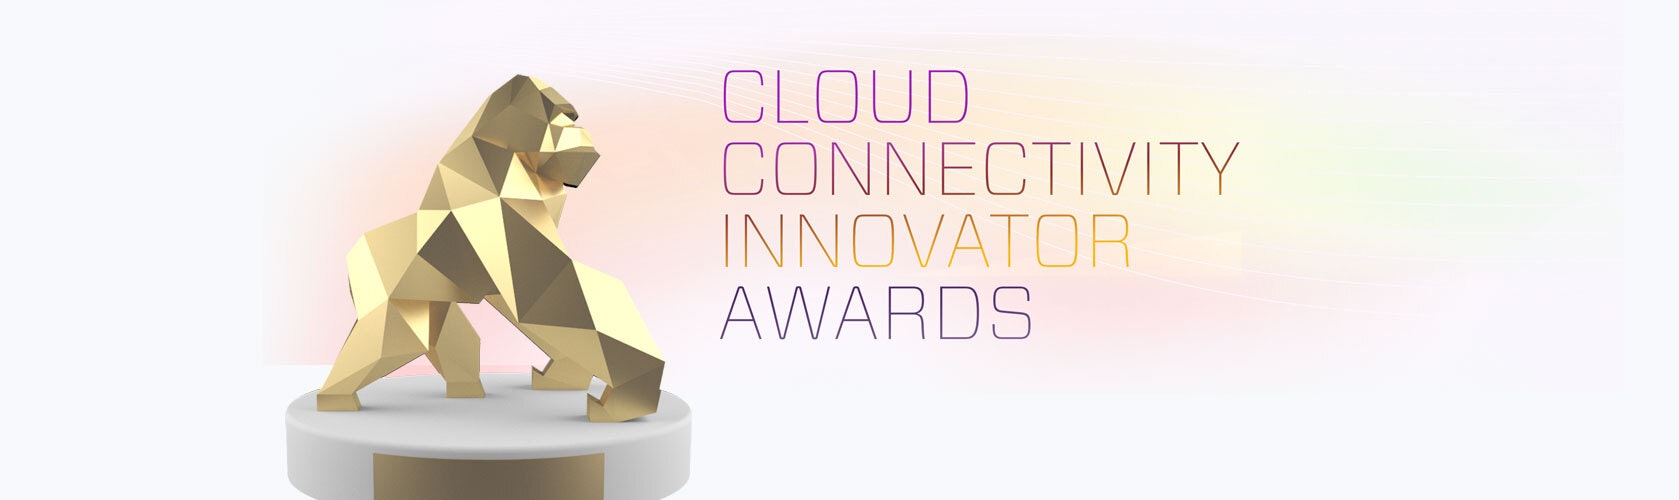 Kong Introduces the Cloud Connectivity Innovator Awards